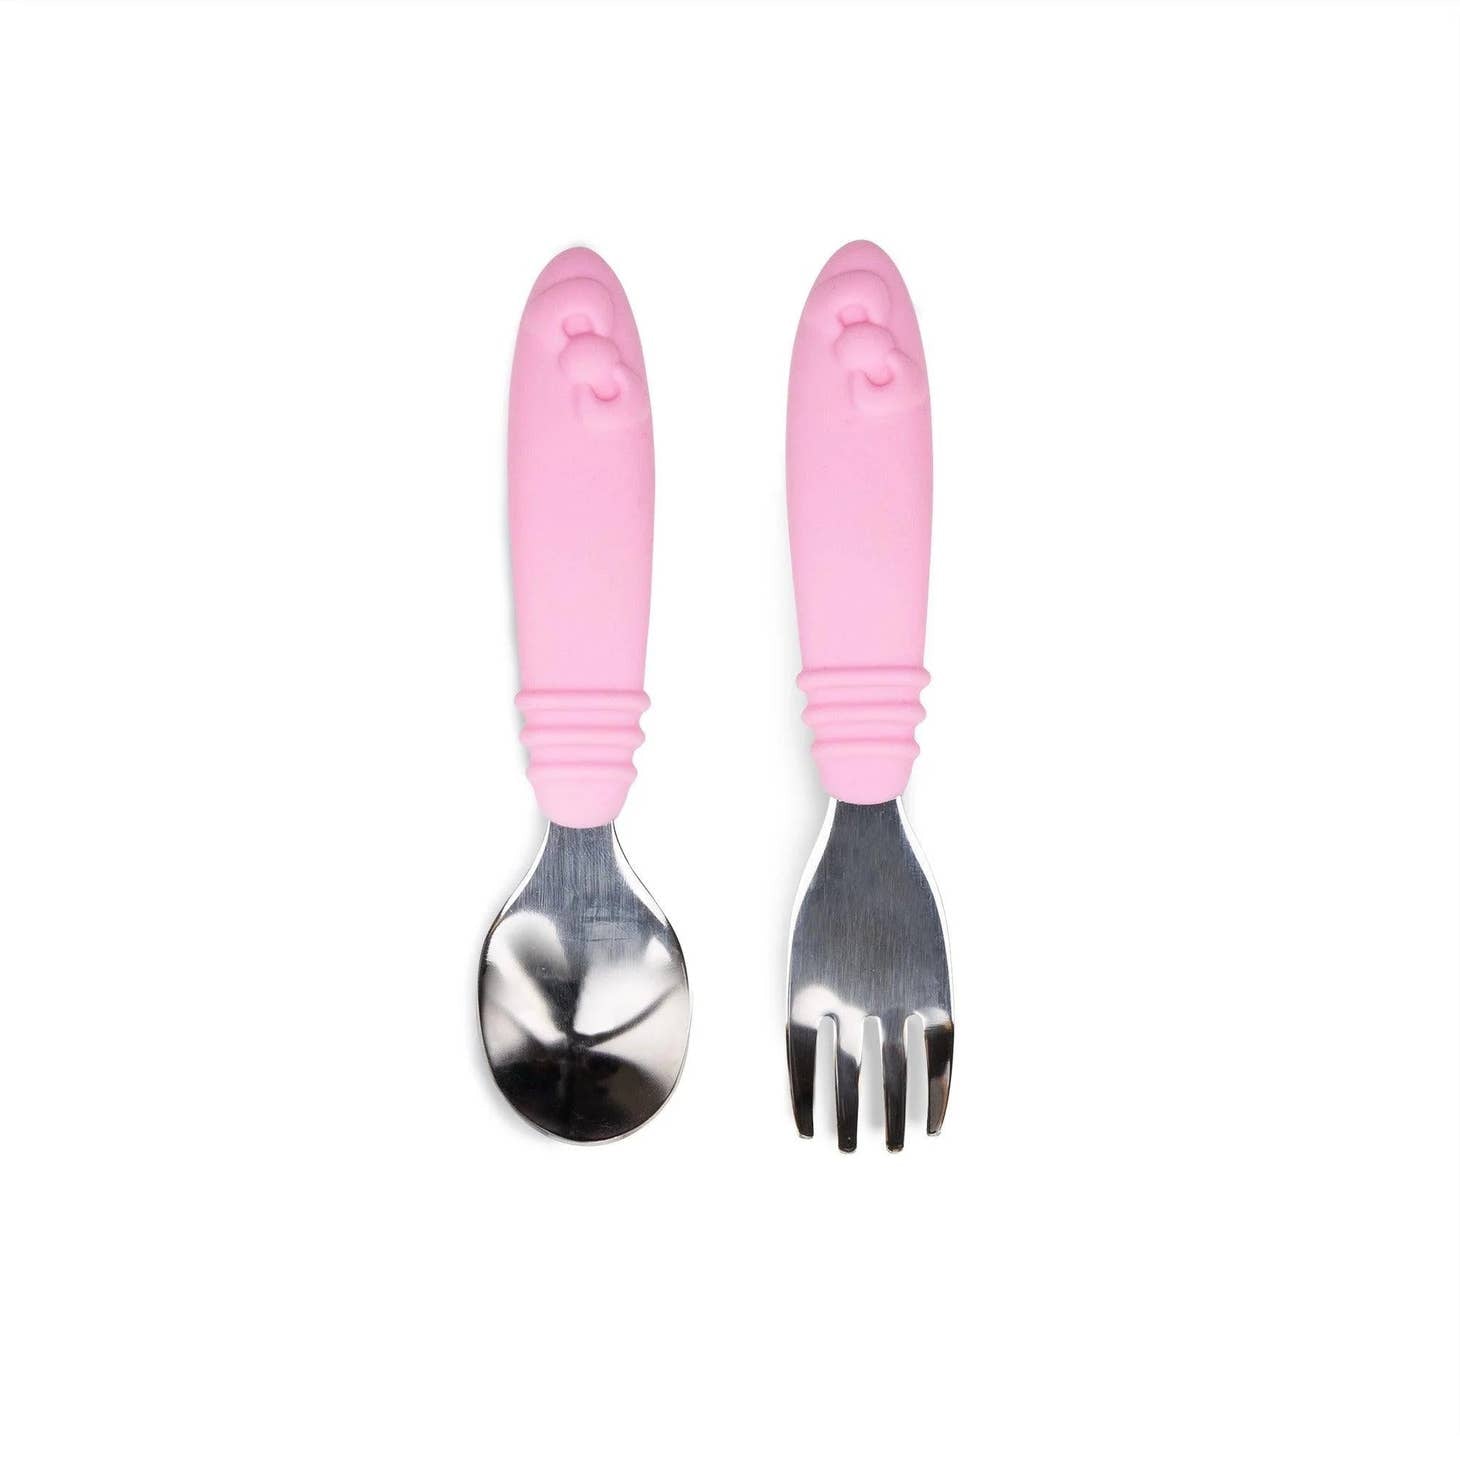 Spoon + Fork: Hello Kitty®